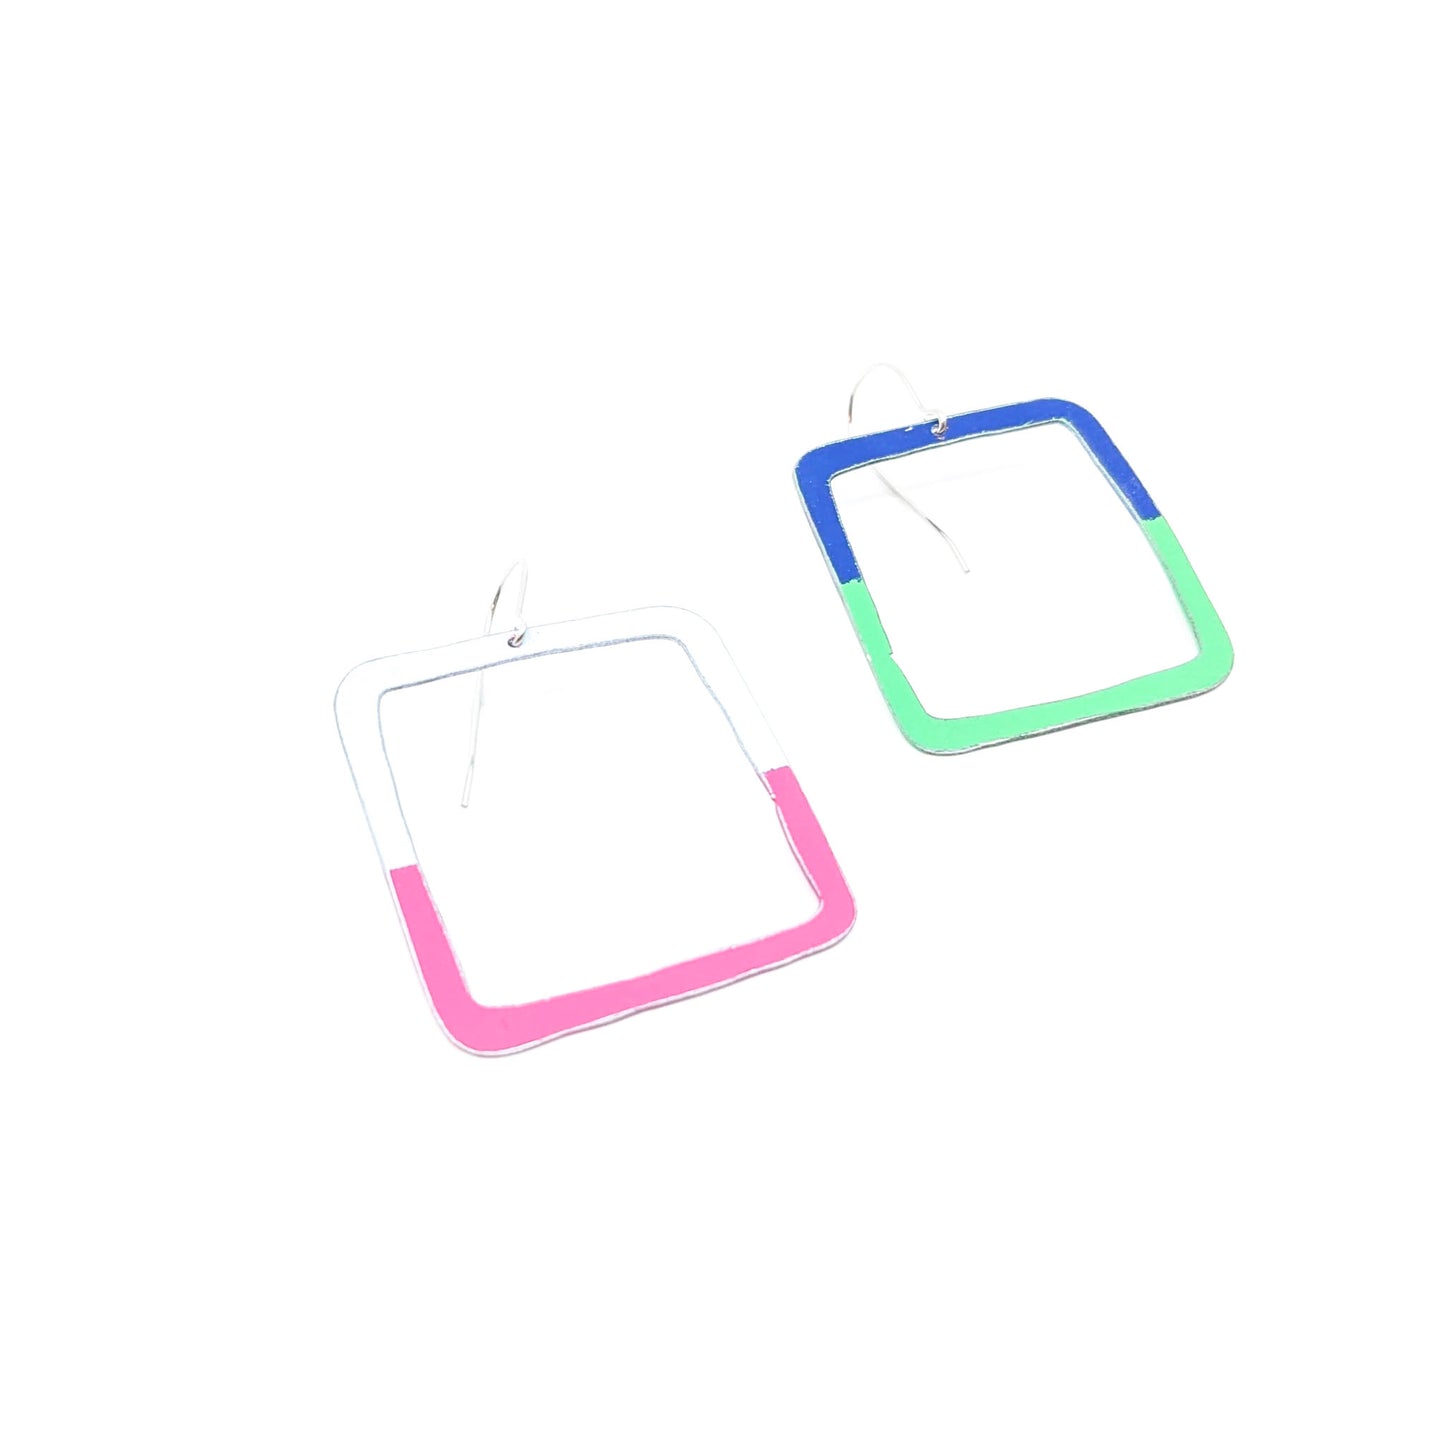 Multicolor Square Earrings